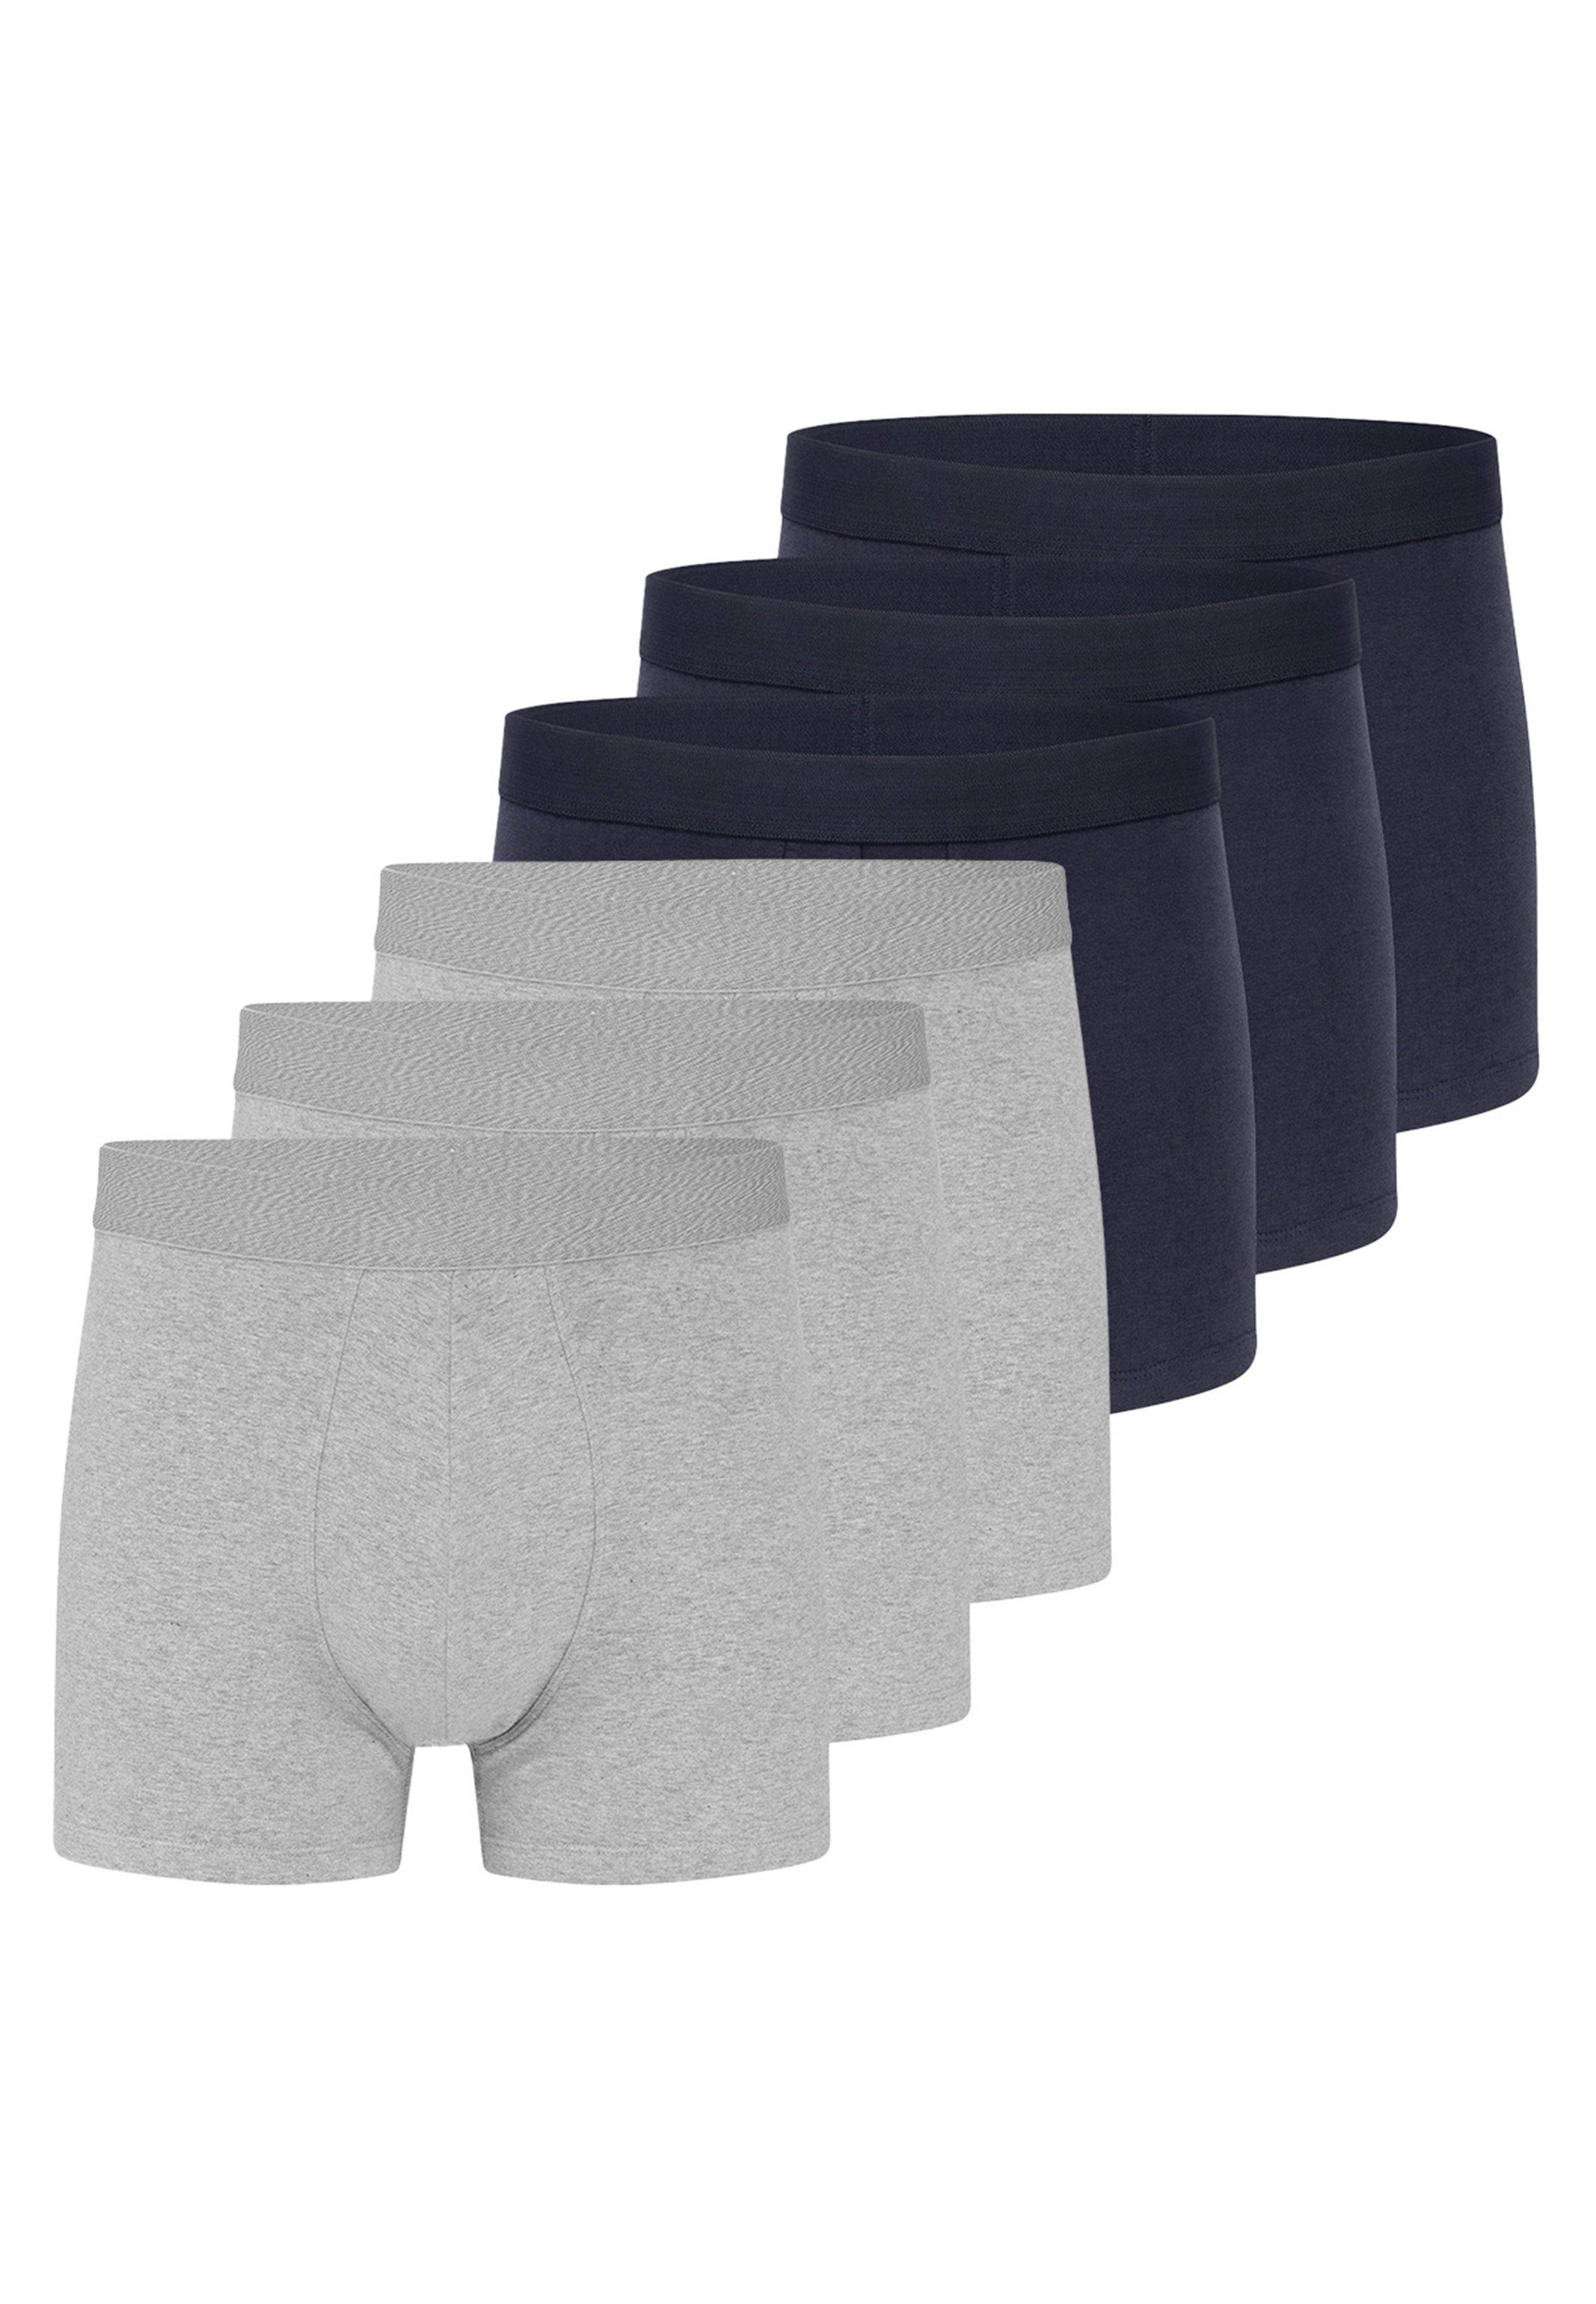 Almonu Retro Boxer 6er Pack Organic Cotton (Spar-Set, 6-St) Retro Short / Pant - Baumwolle - Ohne Eingriff - Atmungsaktiv Navy / Grau Melange